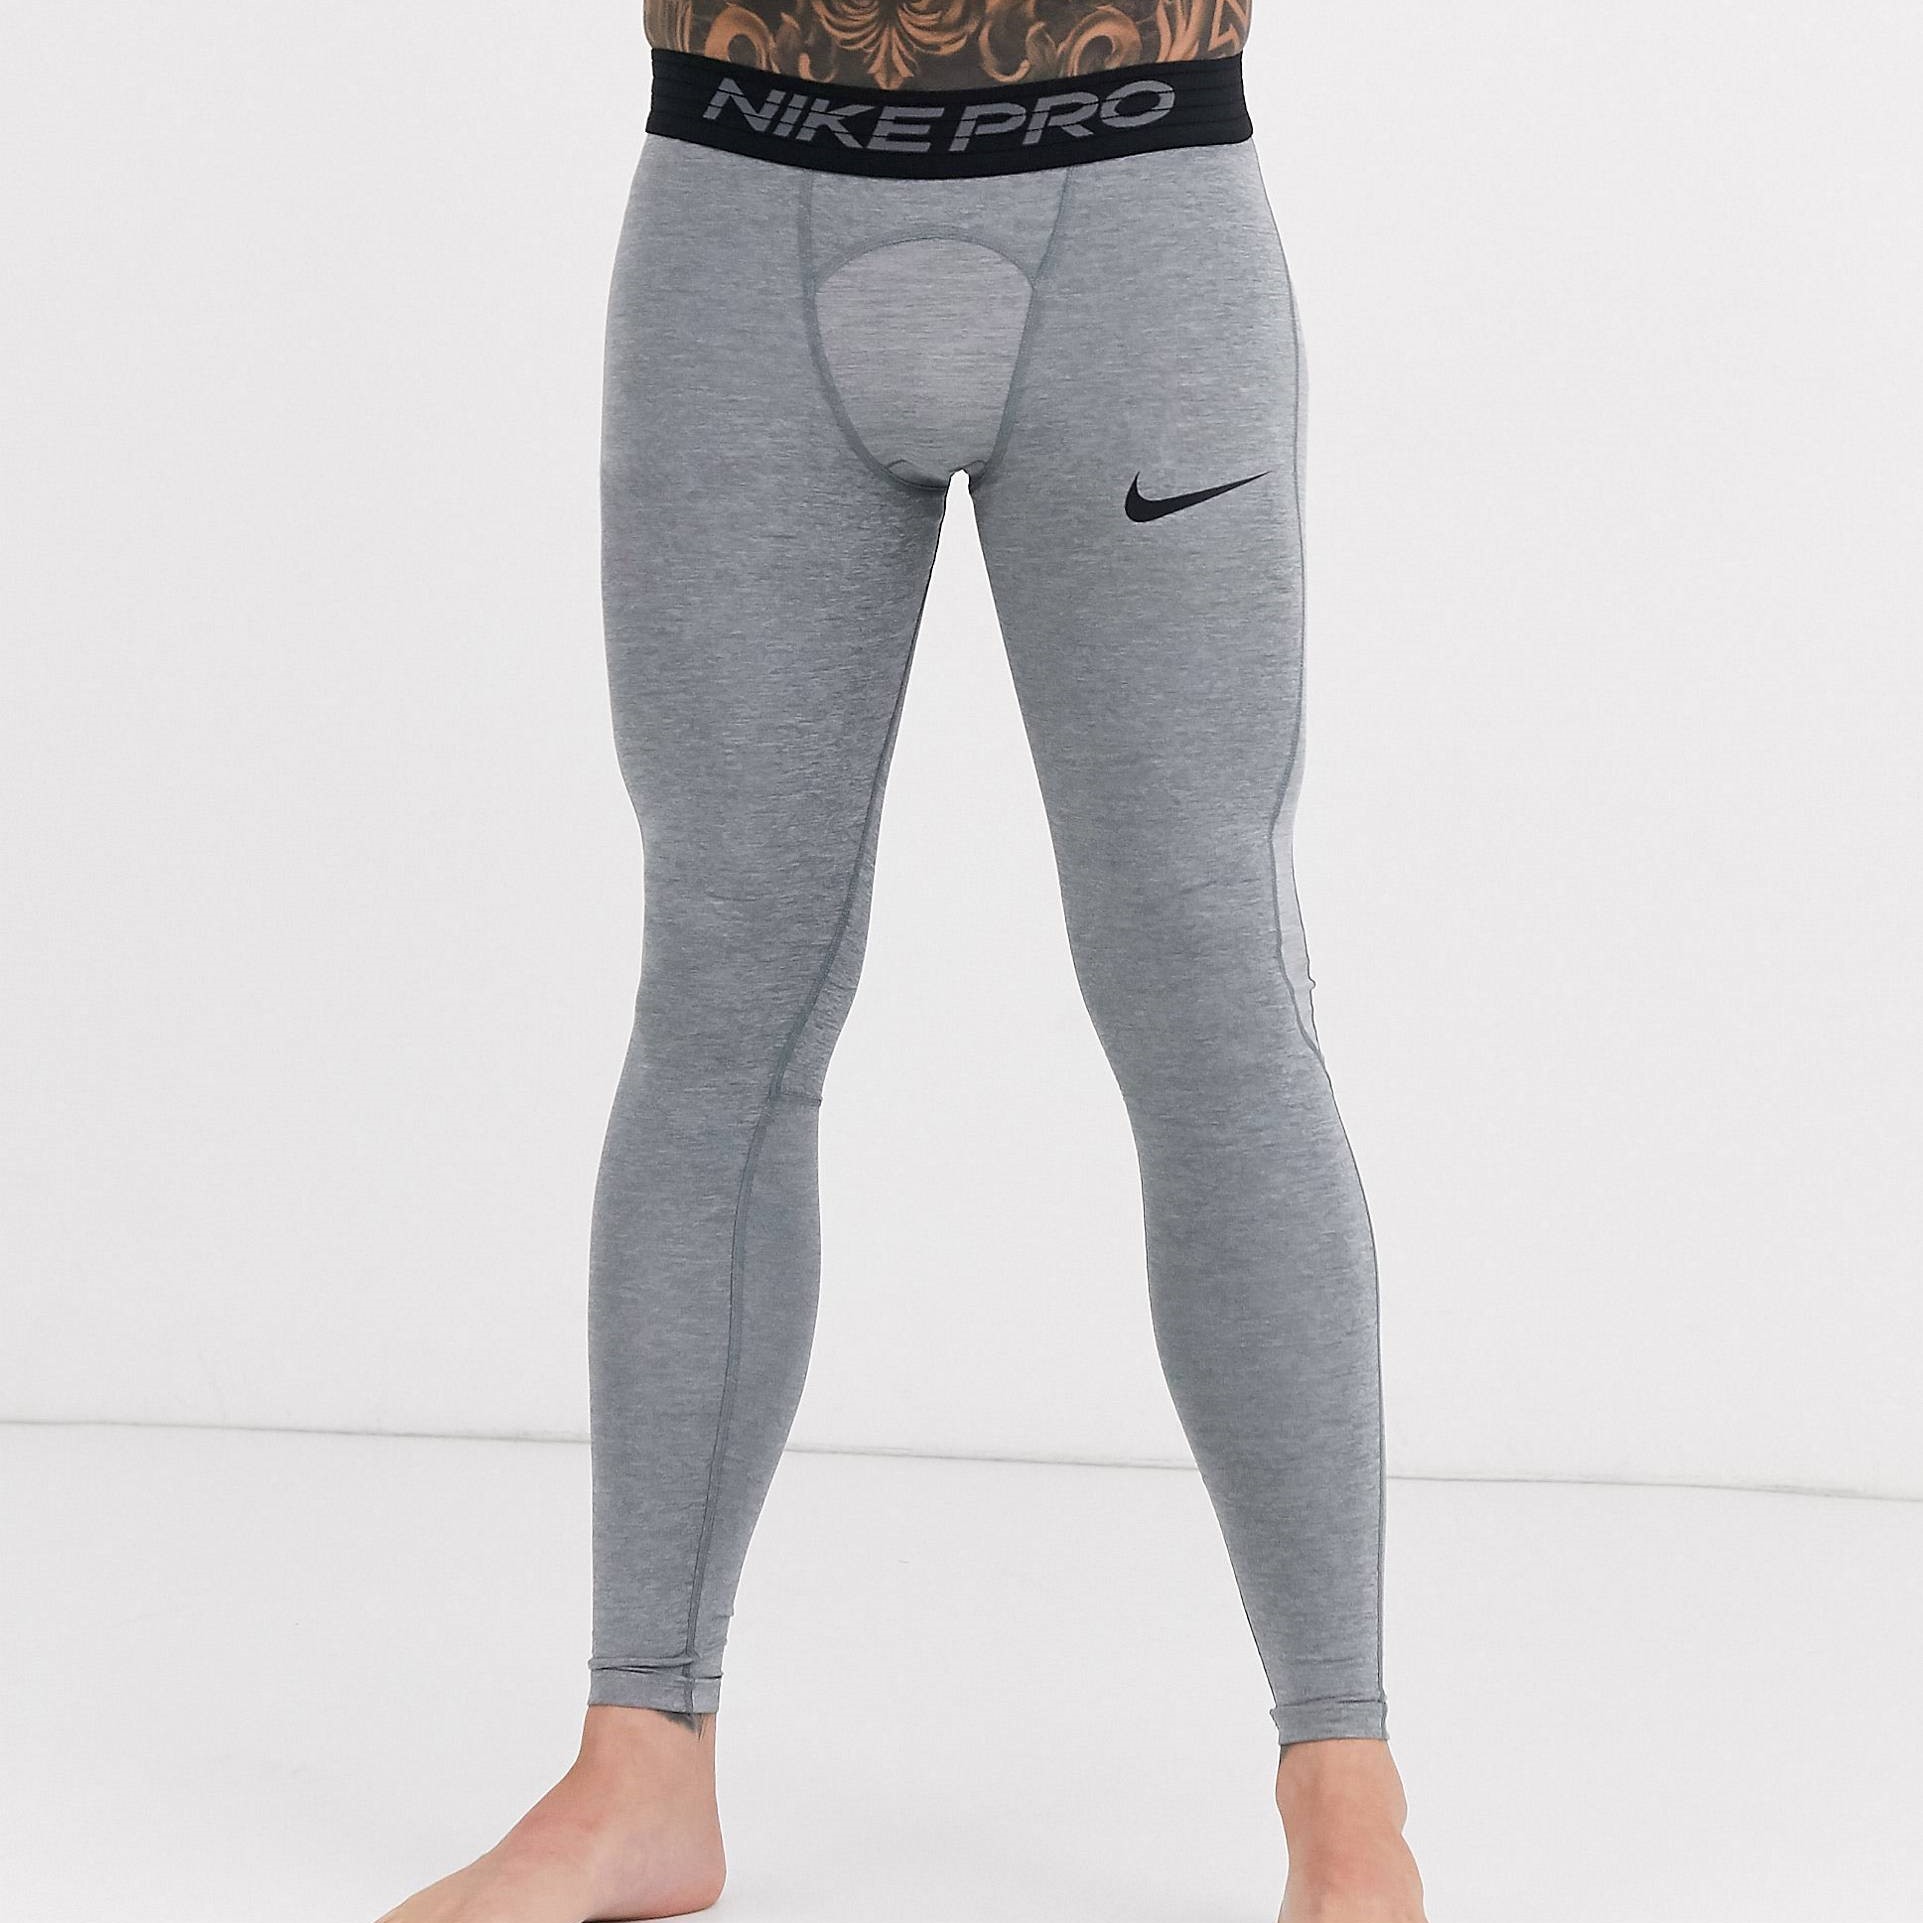 Nike Pro Tight fit Men Grey